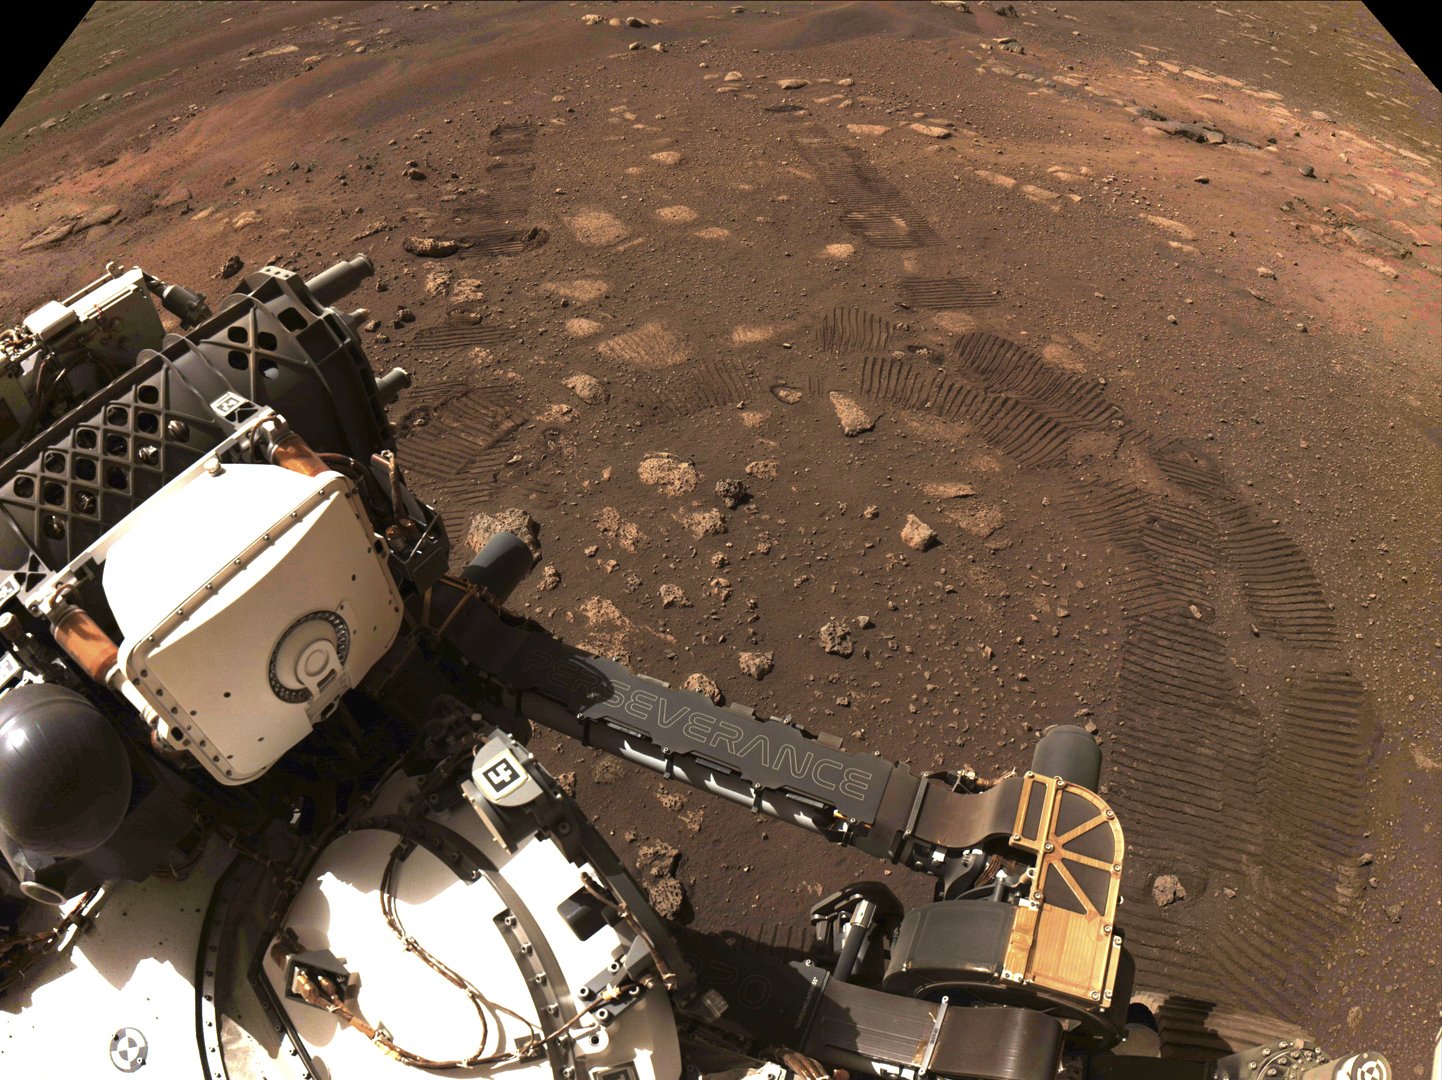 NASA’s new Mars rover hits dusty red road, maiden voyage 21 feet